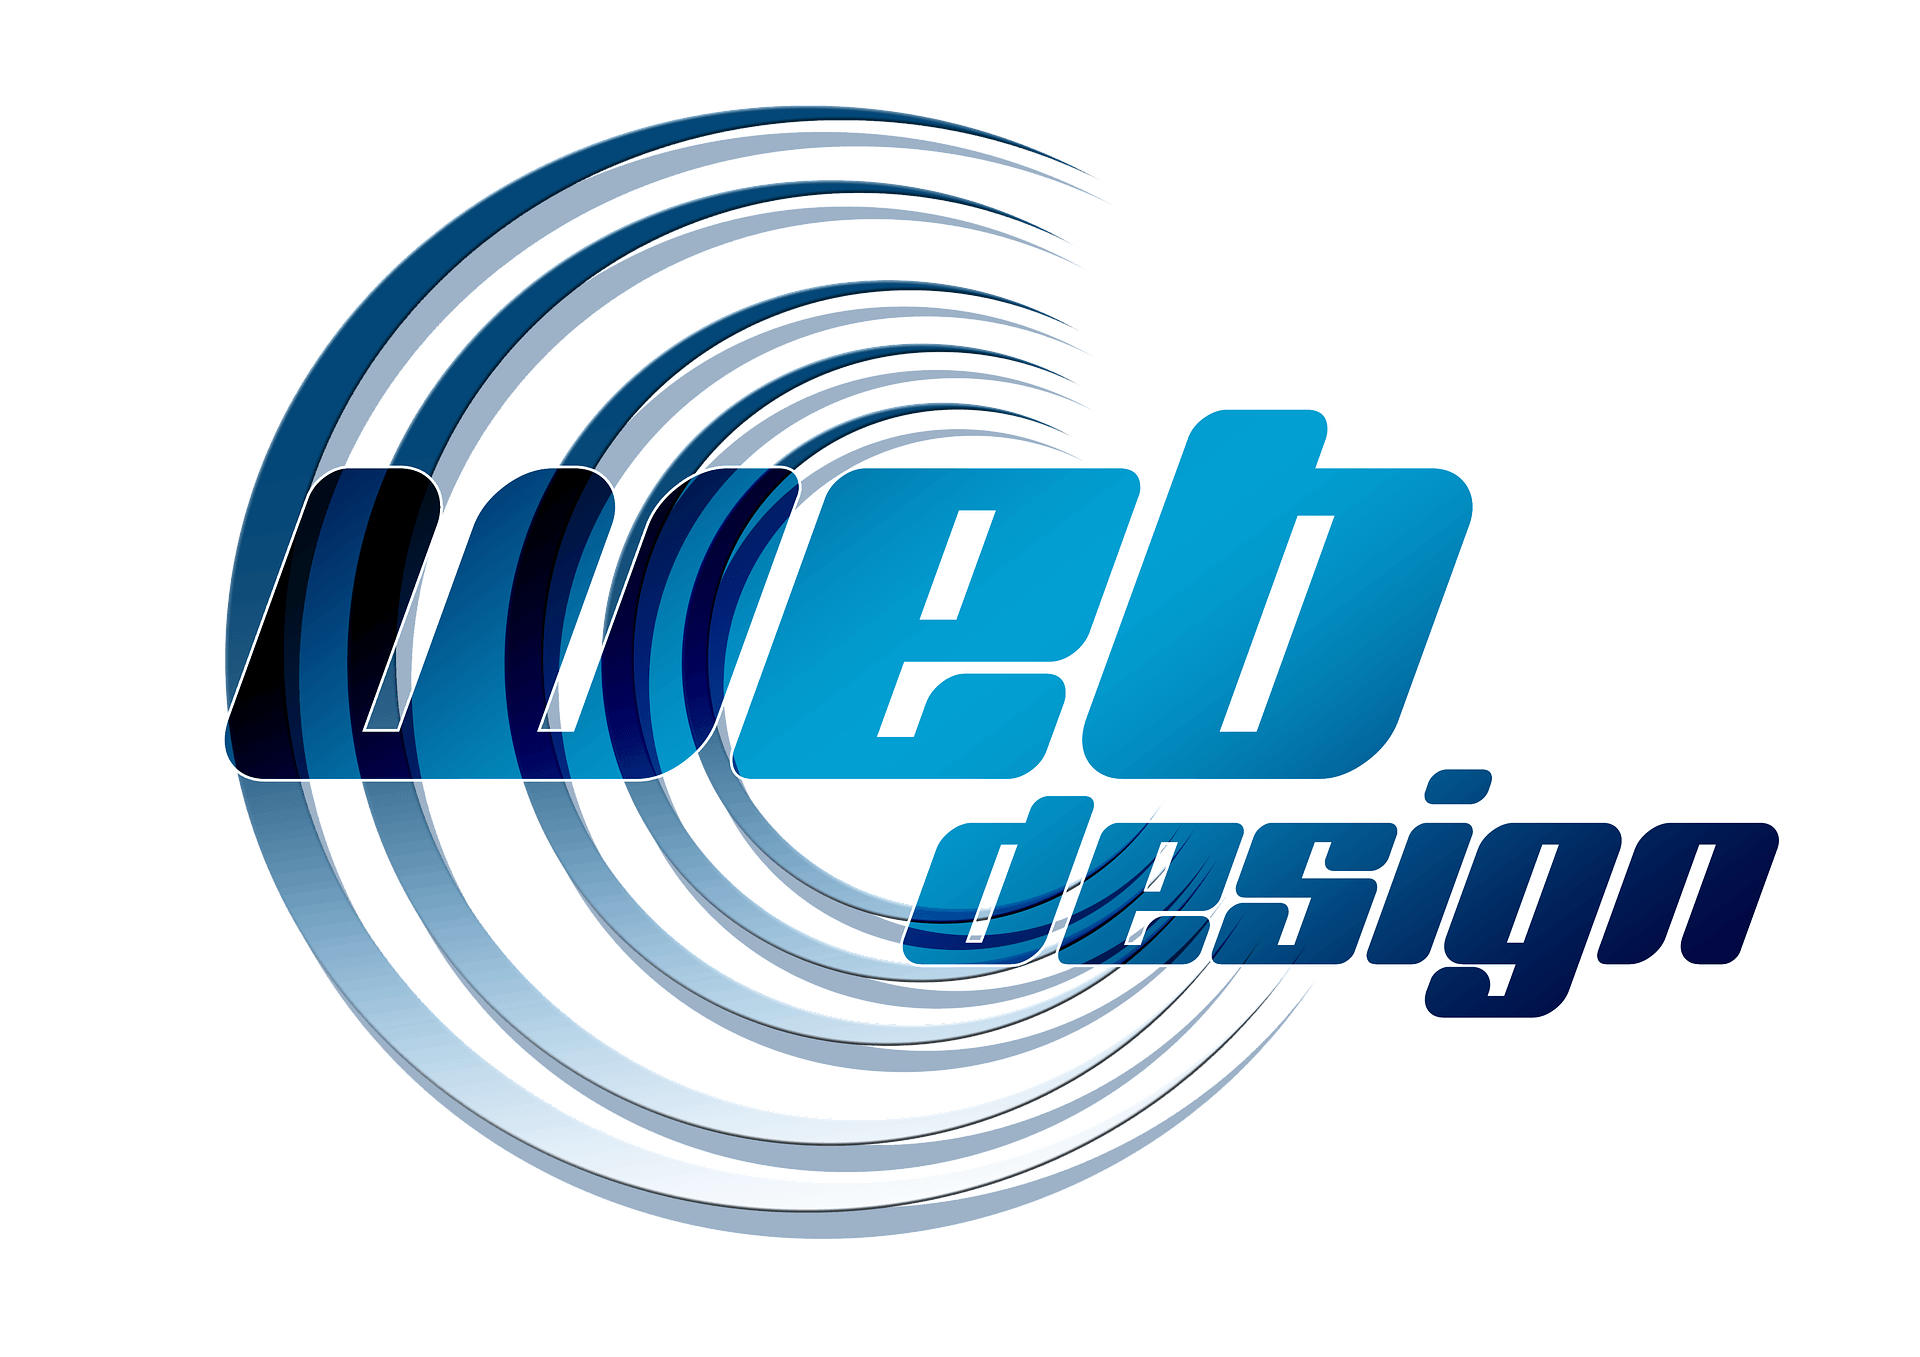 Web Design Logo - Digi Creations Full Service, Designers, Web Design and Development ...